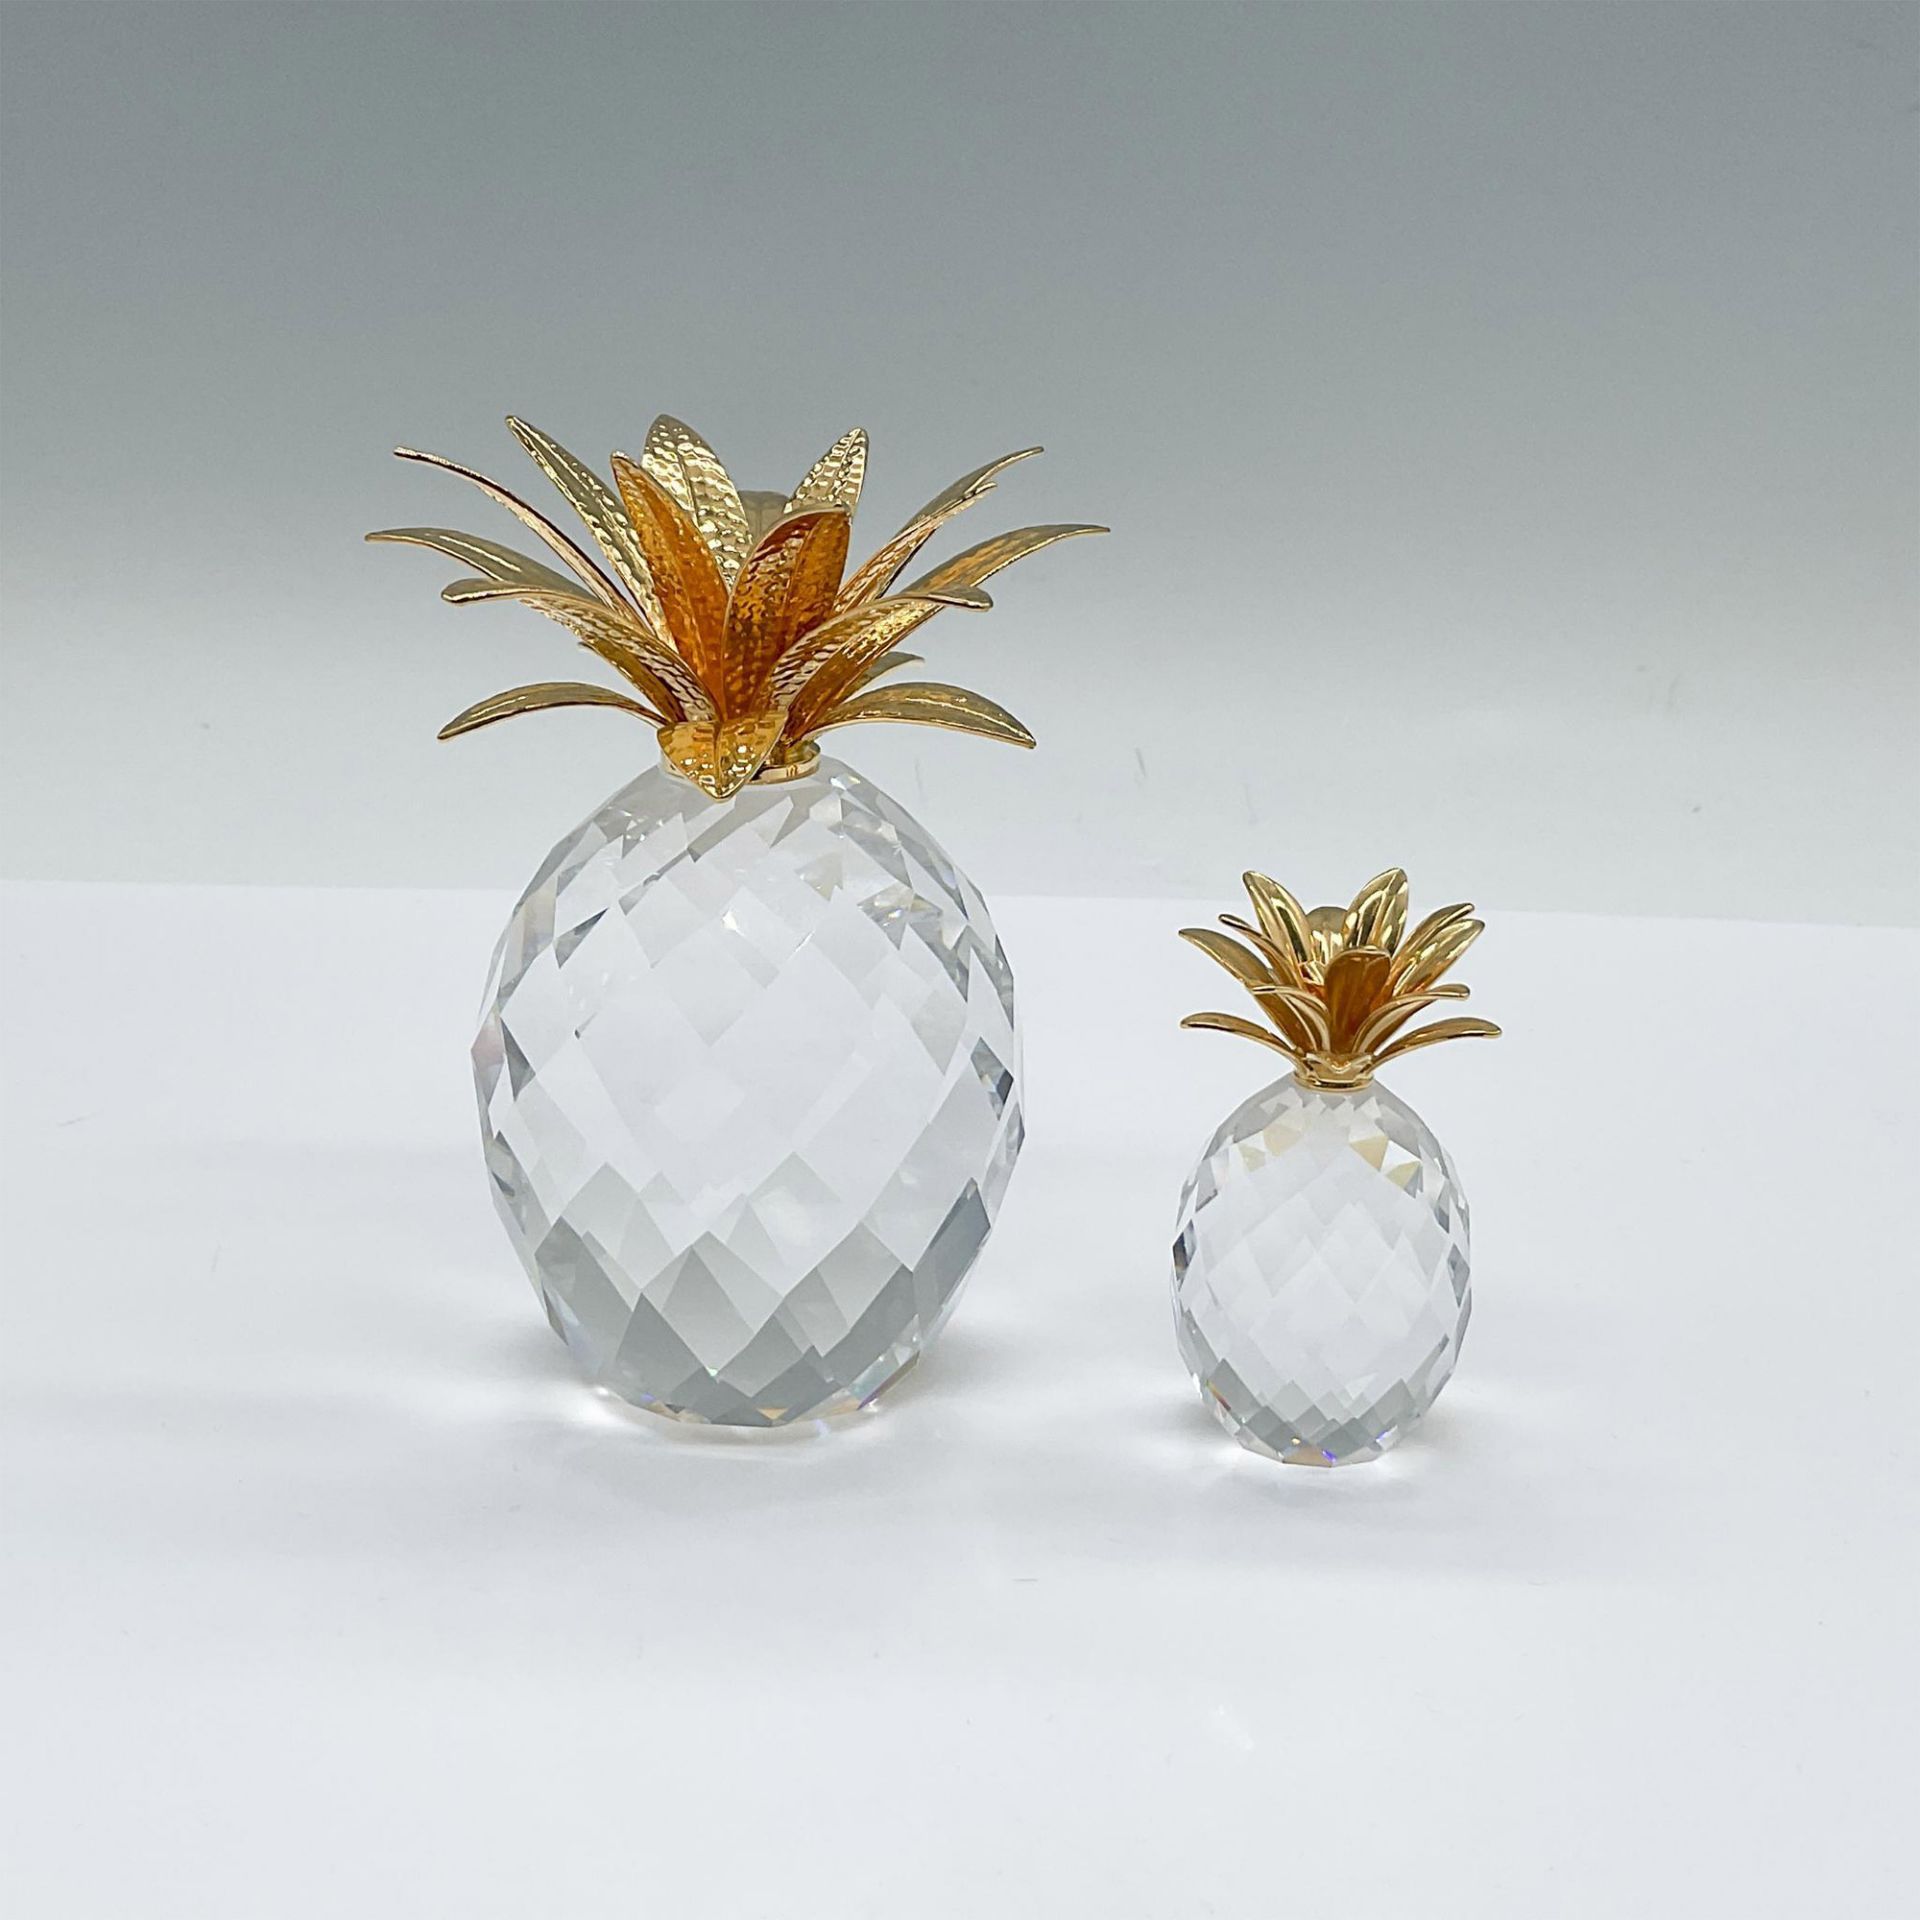 2pc Swarovski Crystal Figurines, Large and Small Pineapple